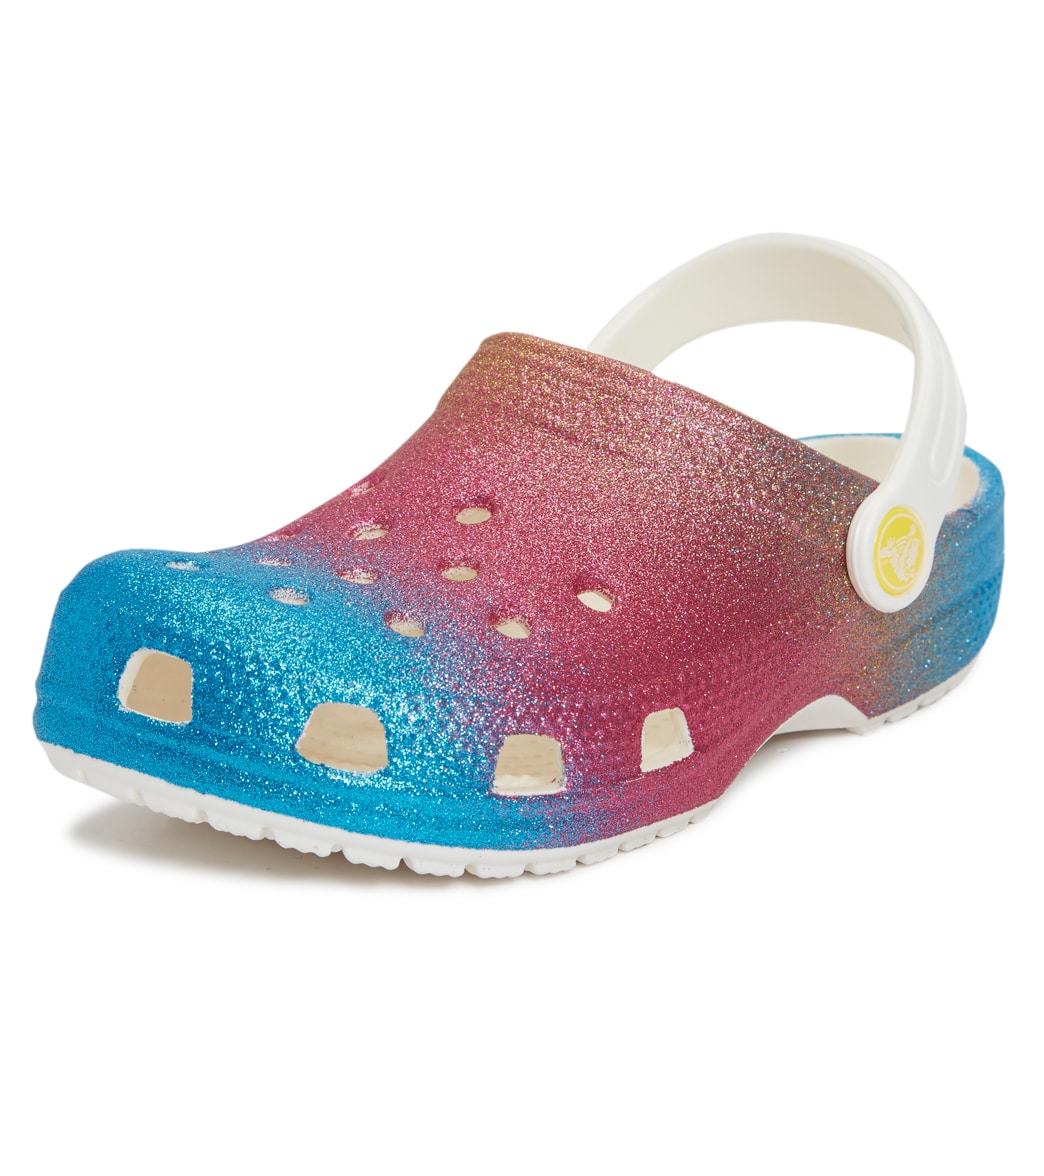 Crocs Girls' Classic Ombre Glitter Clogs - Oyster/Multi 5 - Swimoutlet.com